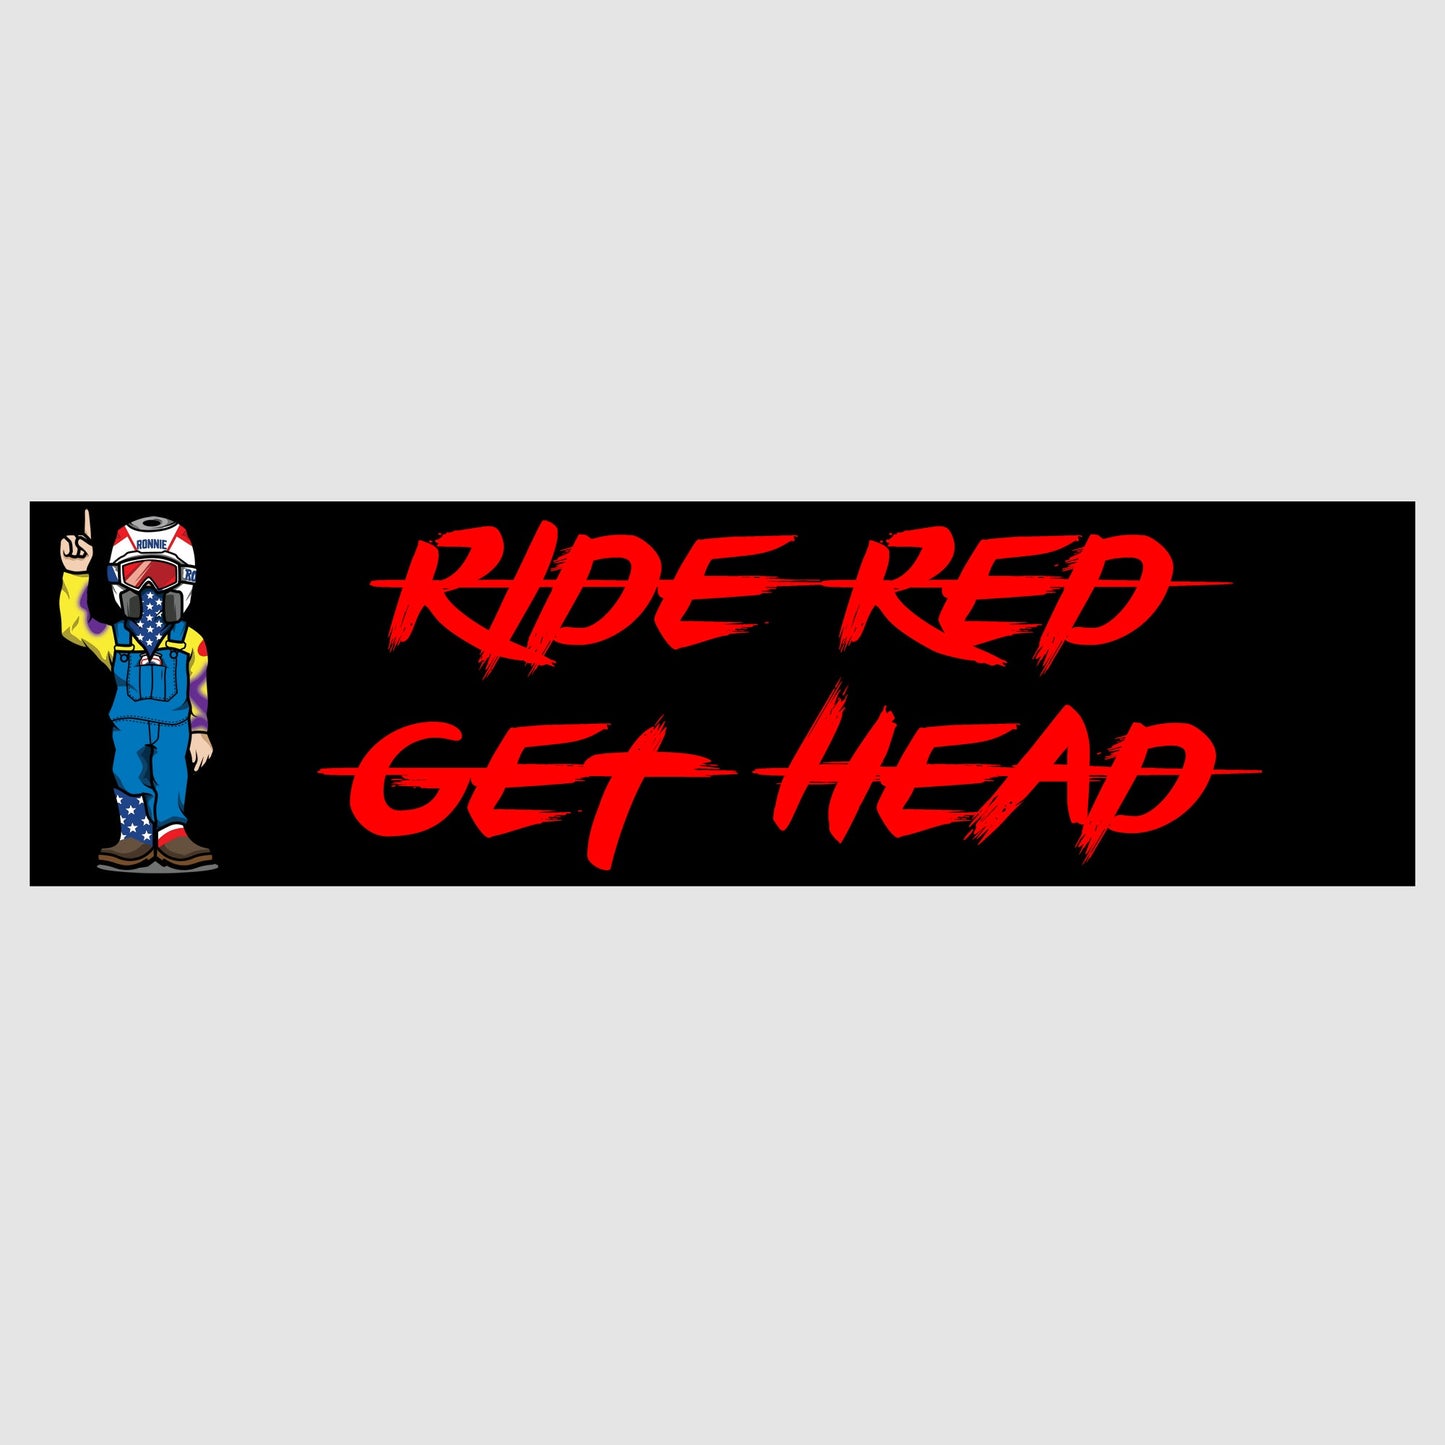 Ride Red, Get Head - Ultimate Motocross Bumper